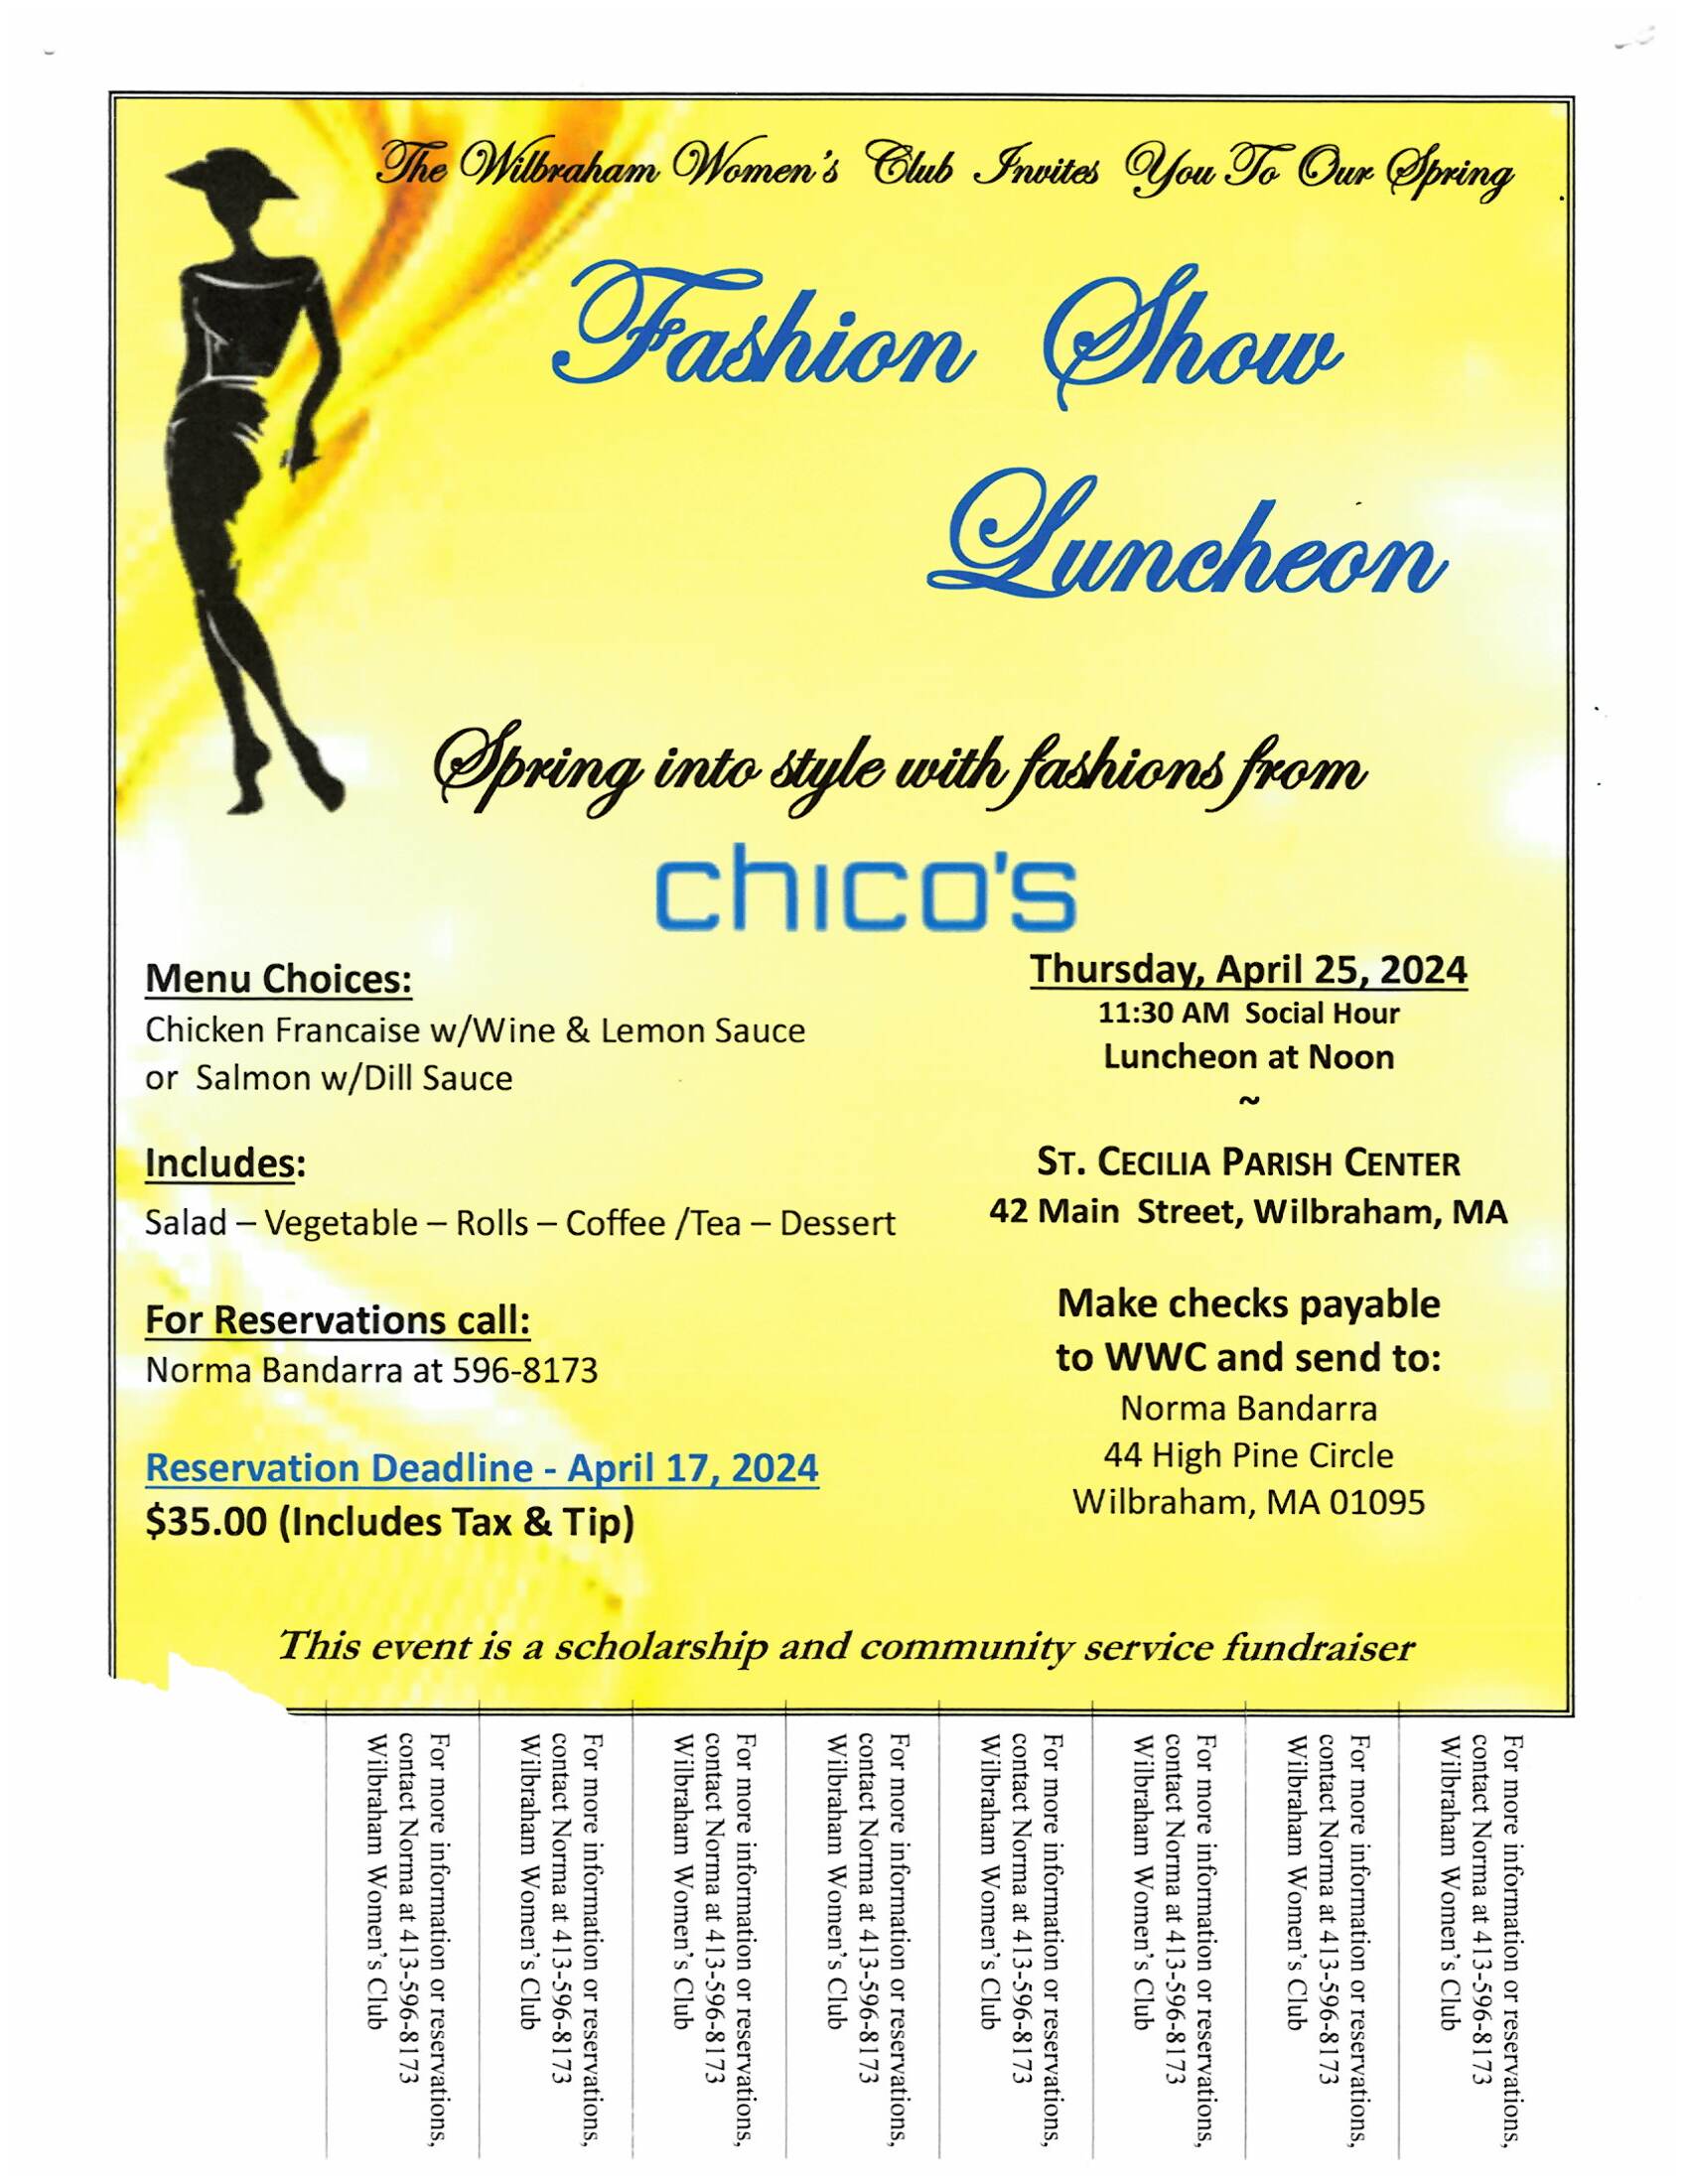 Womens club fashion show contact 596-8173